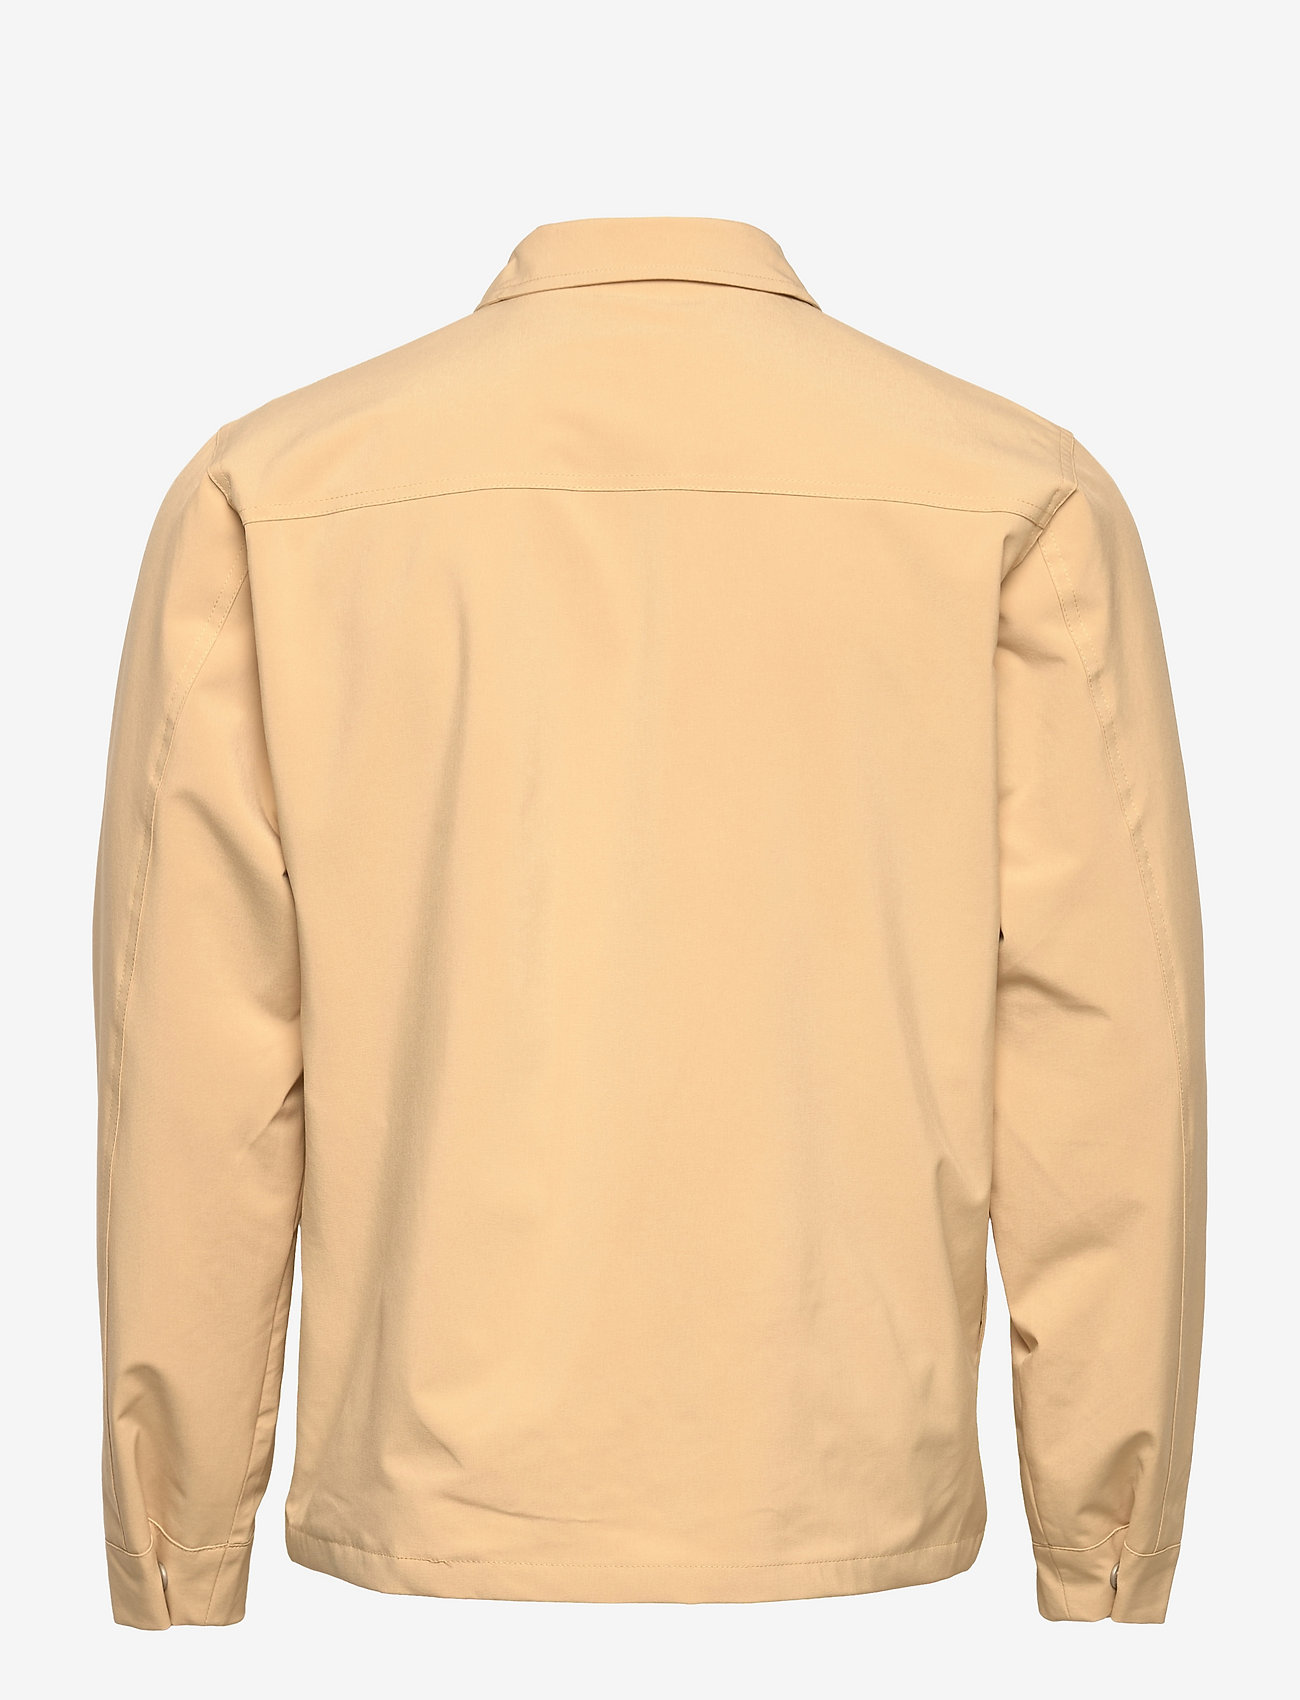 Revolution - Outerwear - spring jackets - khaki - 1